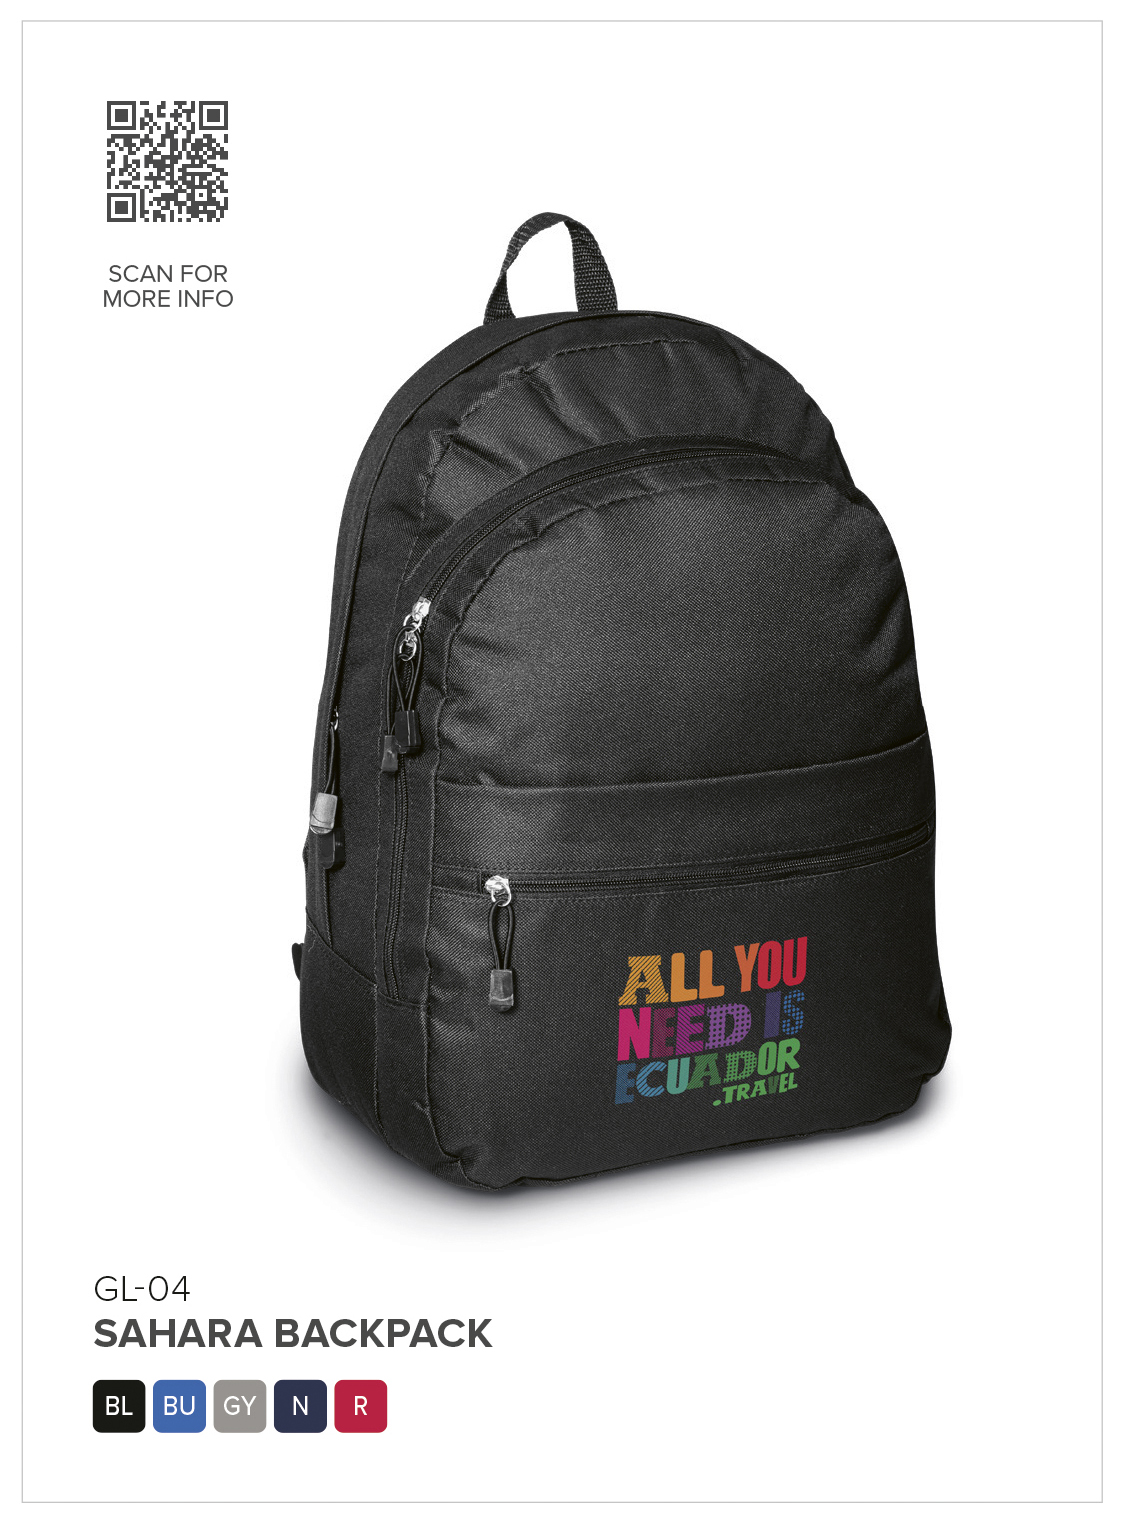 GL-04 - Sahara Backpack - Catalogue Image